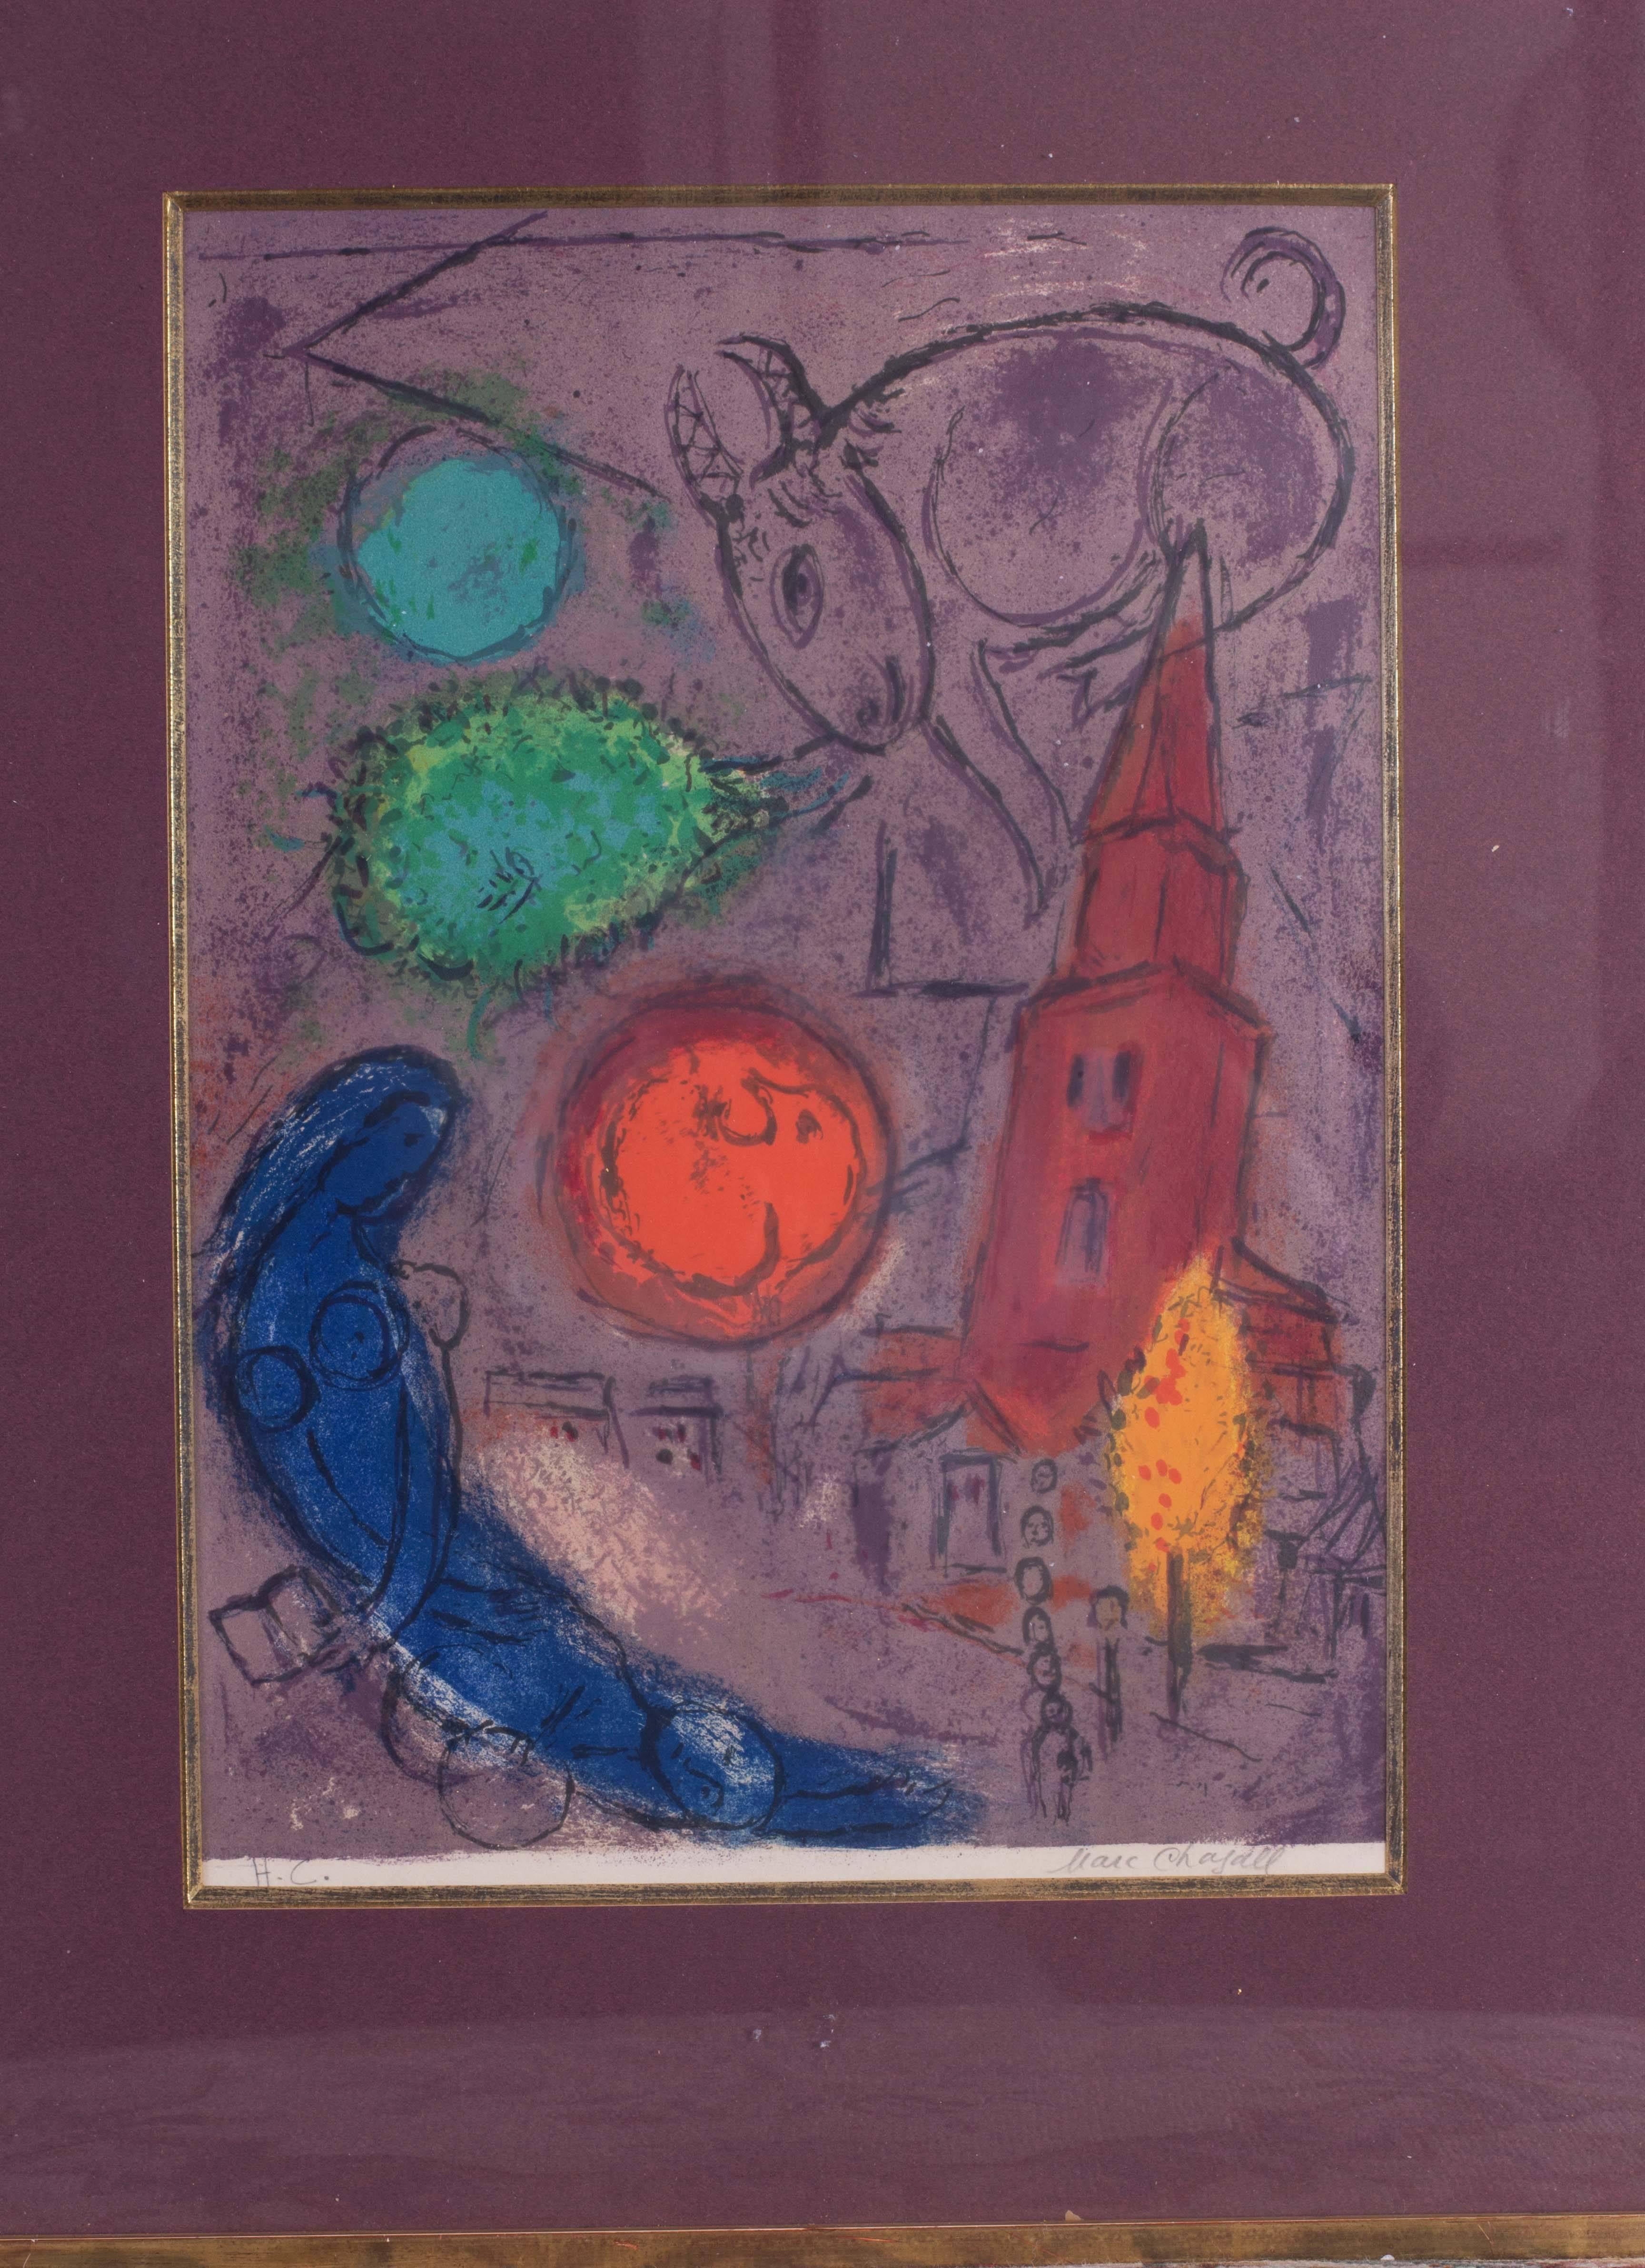 Saint-Germain des Prés - Modern Print by Marc Chagall